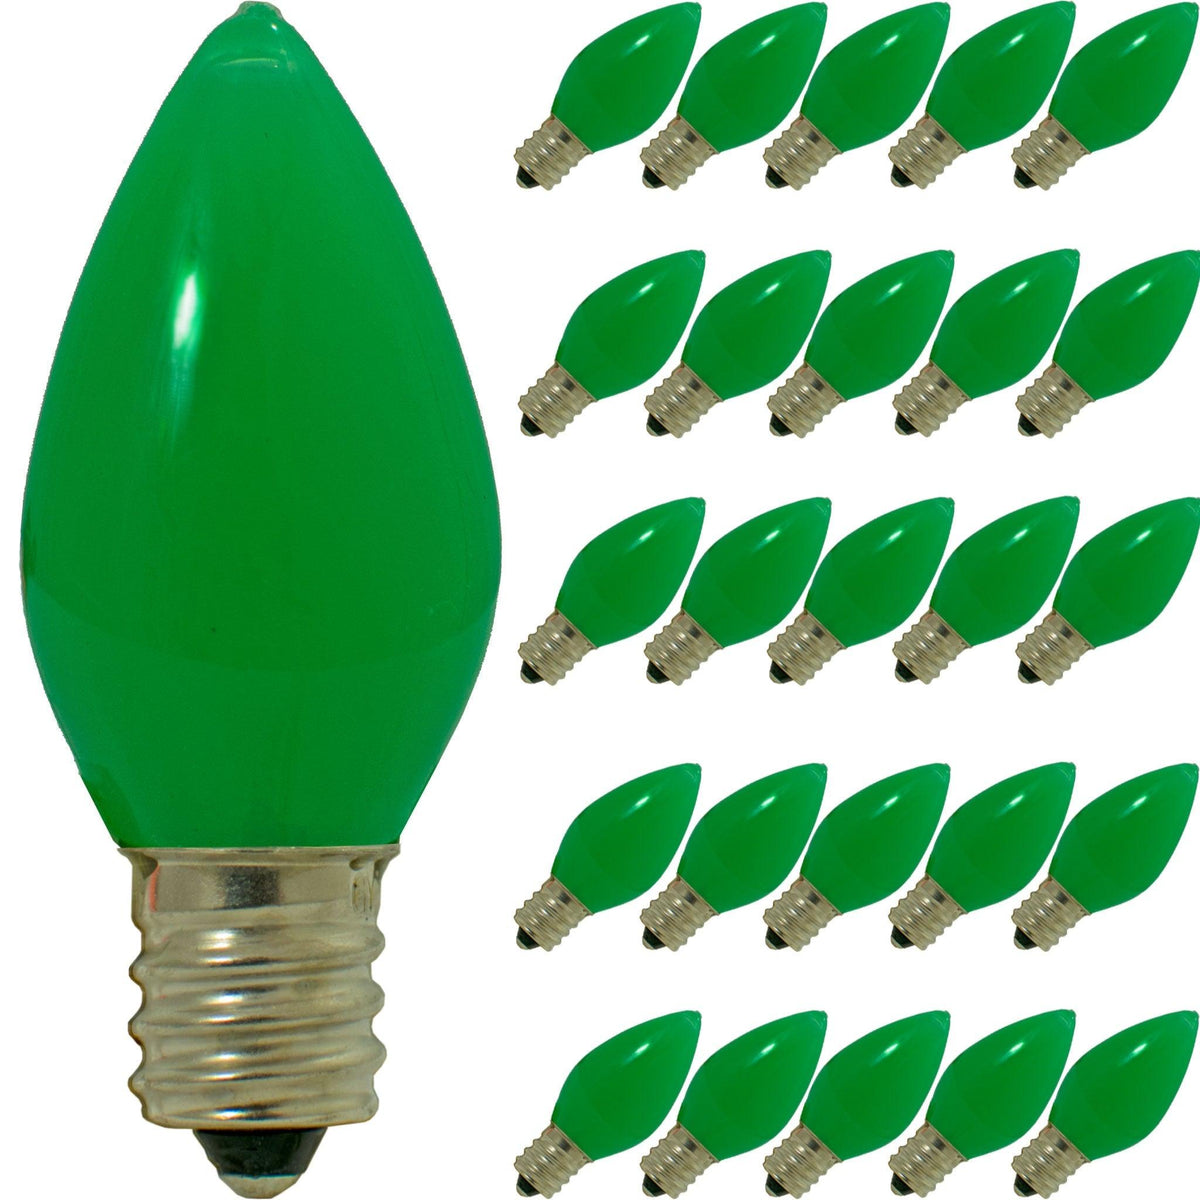 Green Solid LED Light Bulbs - Lee Display